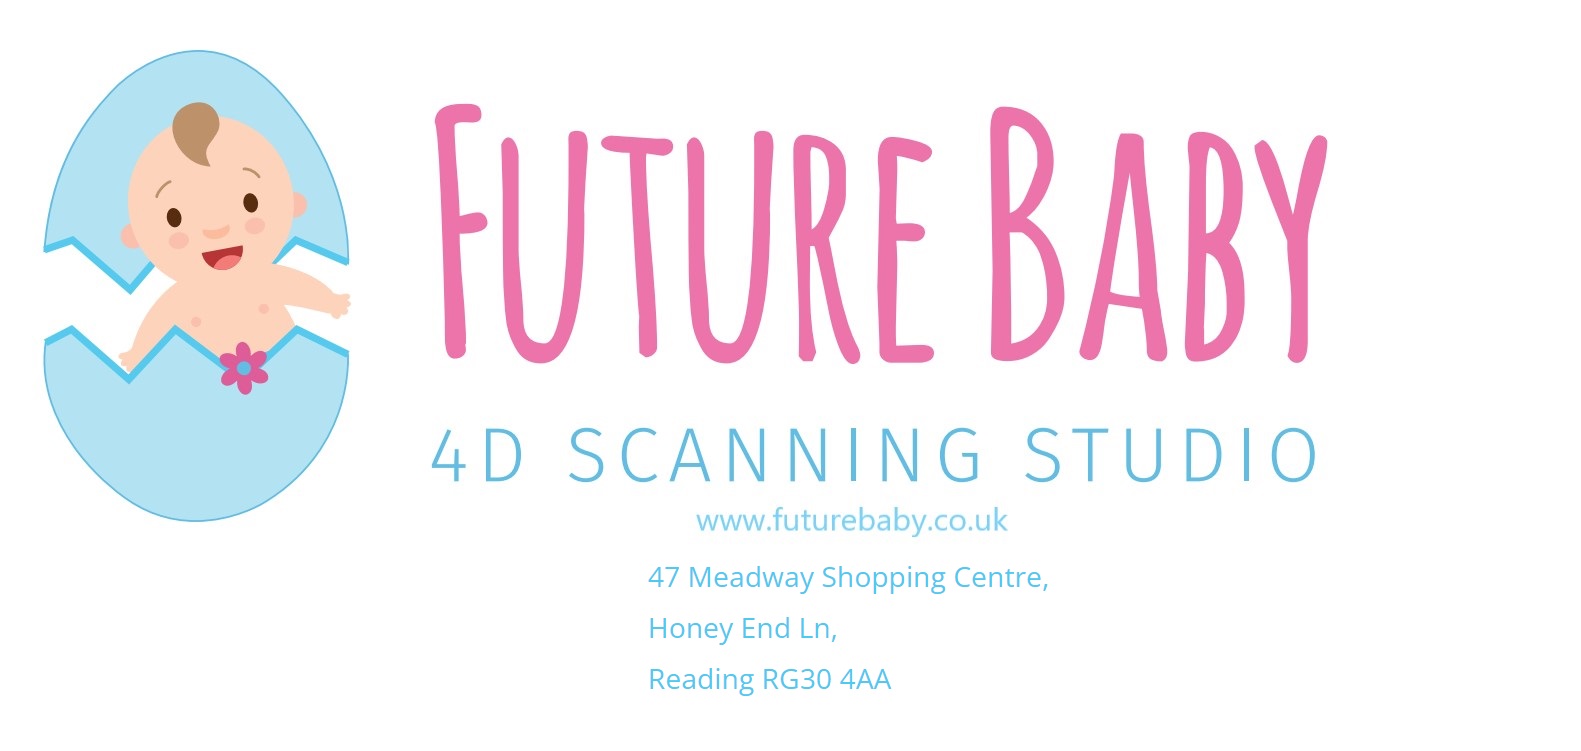 Future Baby 4D Scanning Studio, Reading